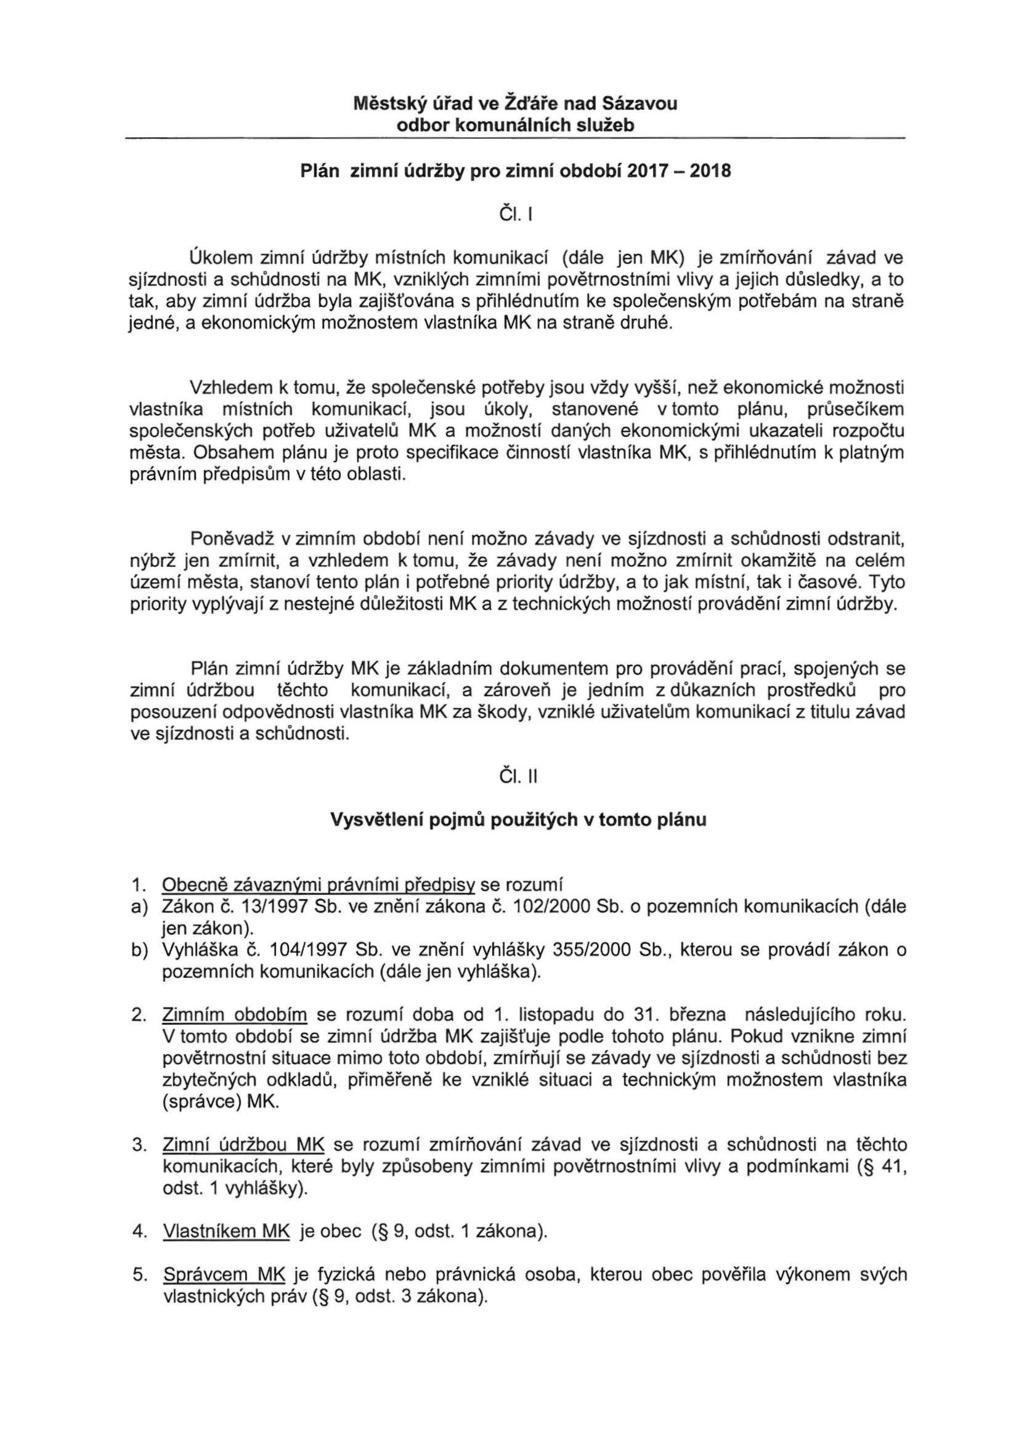 Mestsky urad ve Zd'are nad Sazavou odbor komunalnich sluzeb Plan zimni udrzby pro zimni obdobi 2017-2018 c1.